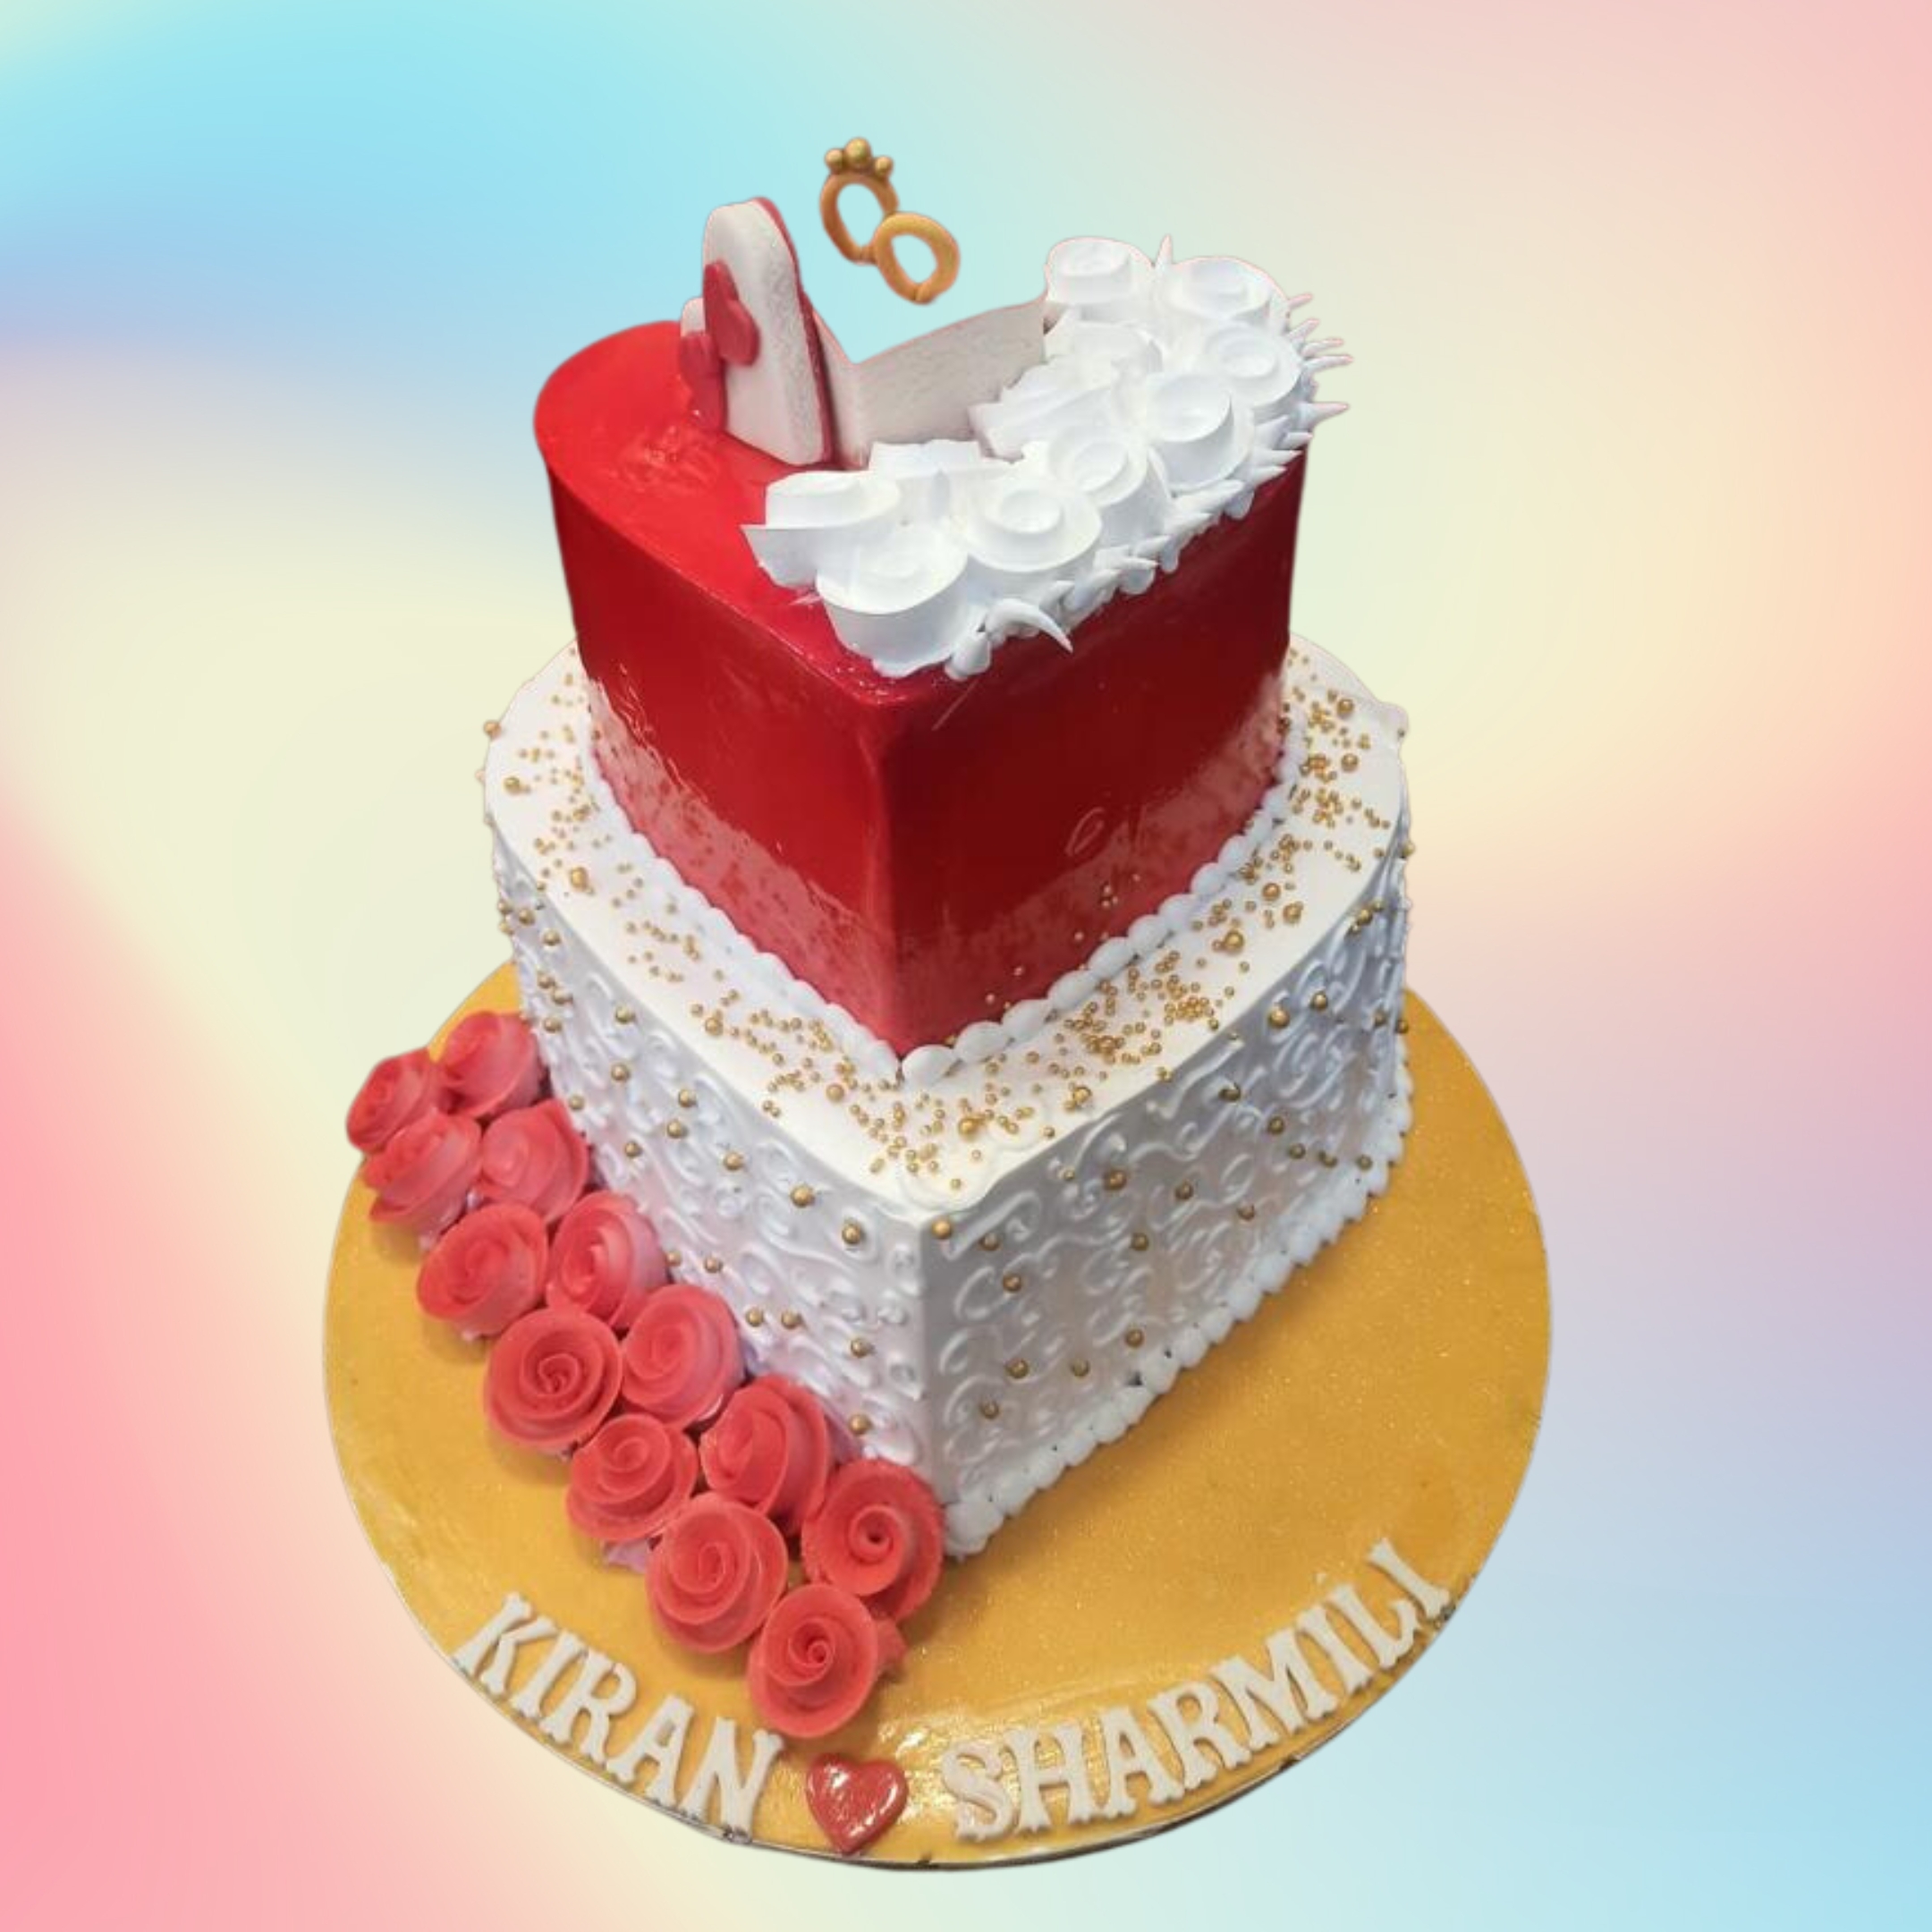 M135) Ring Surprise Heart Shape Cake (1 Kg). – Tricity 24